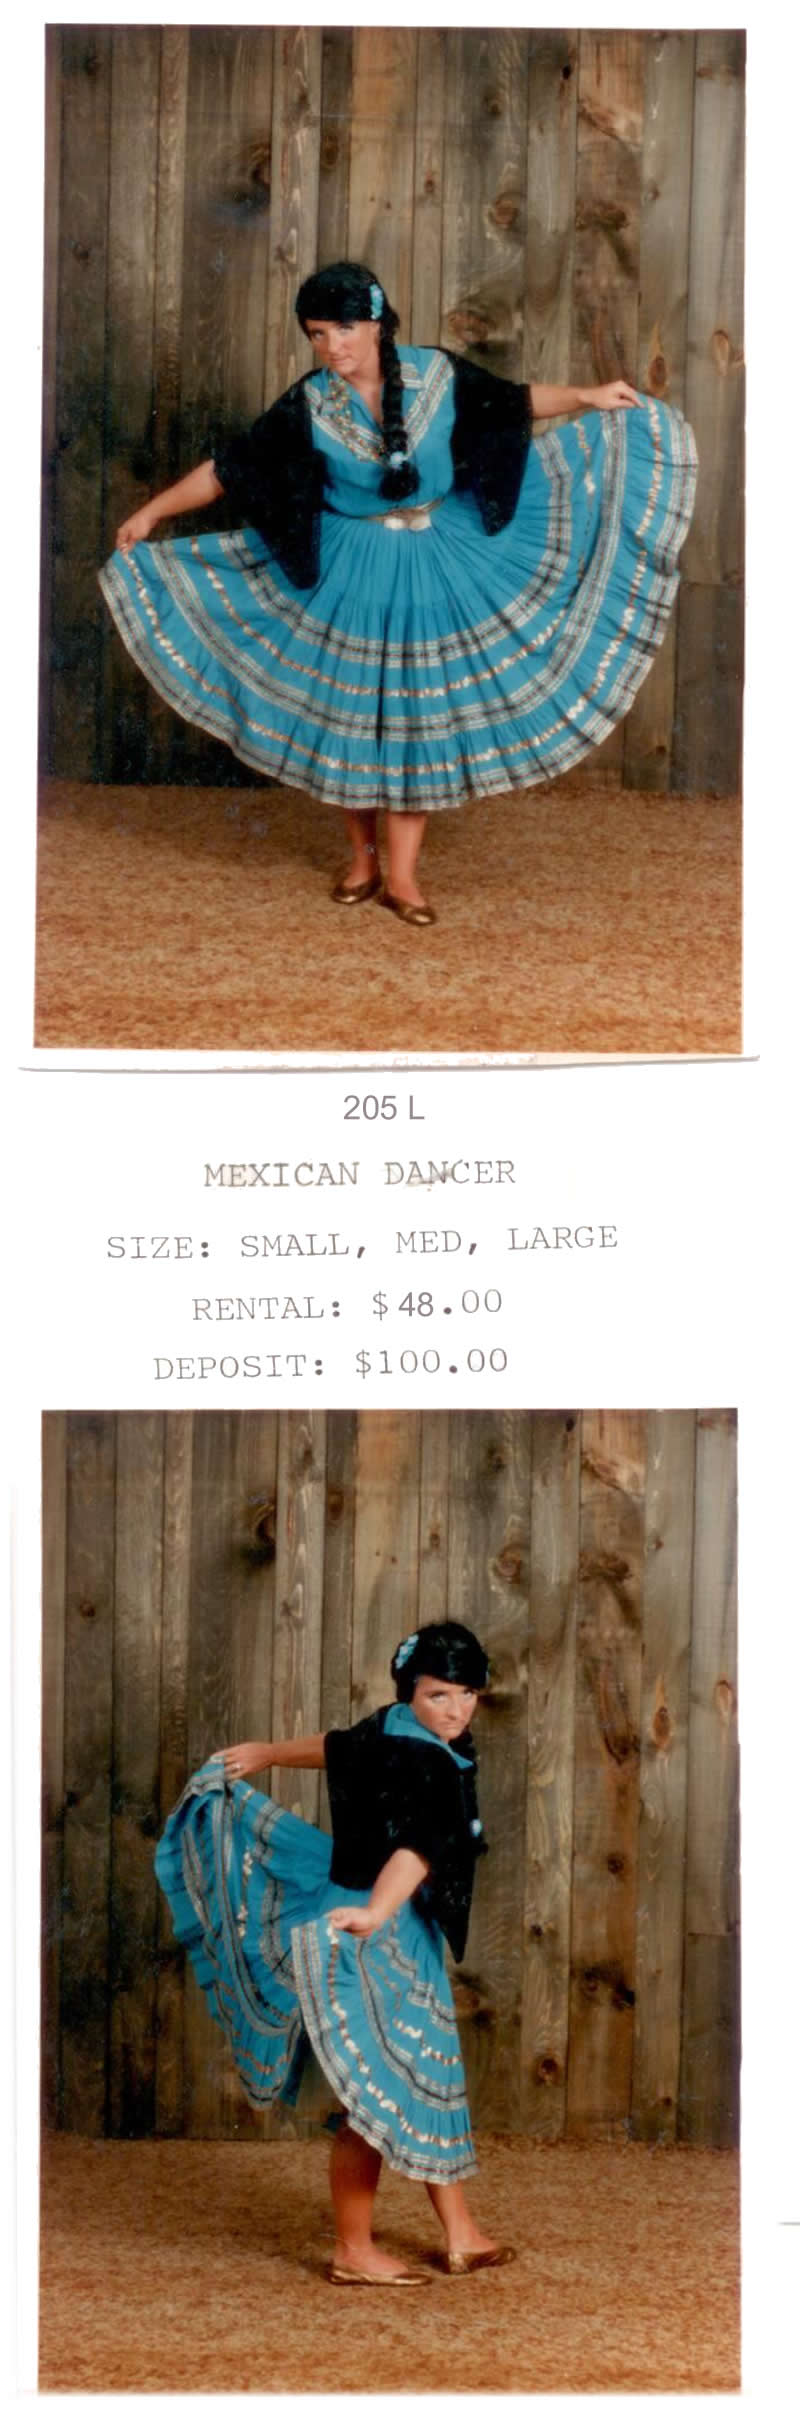 MEXICAN DANCER